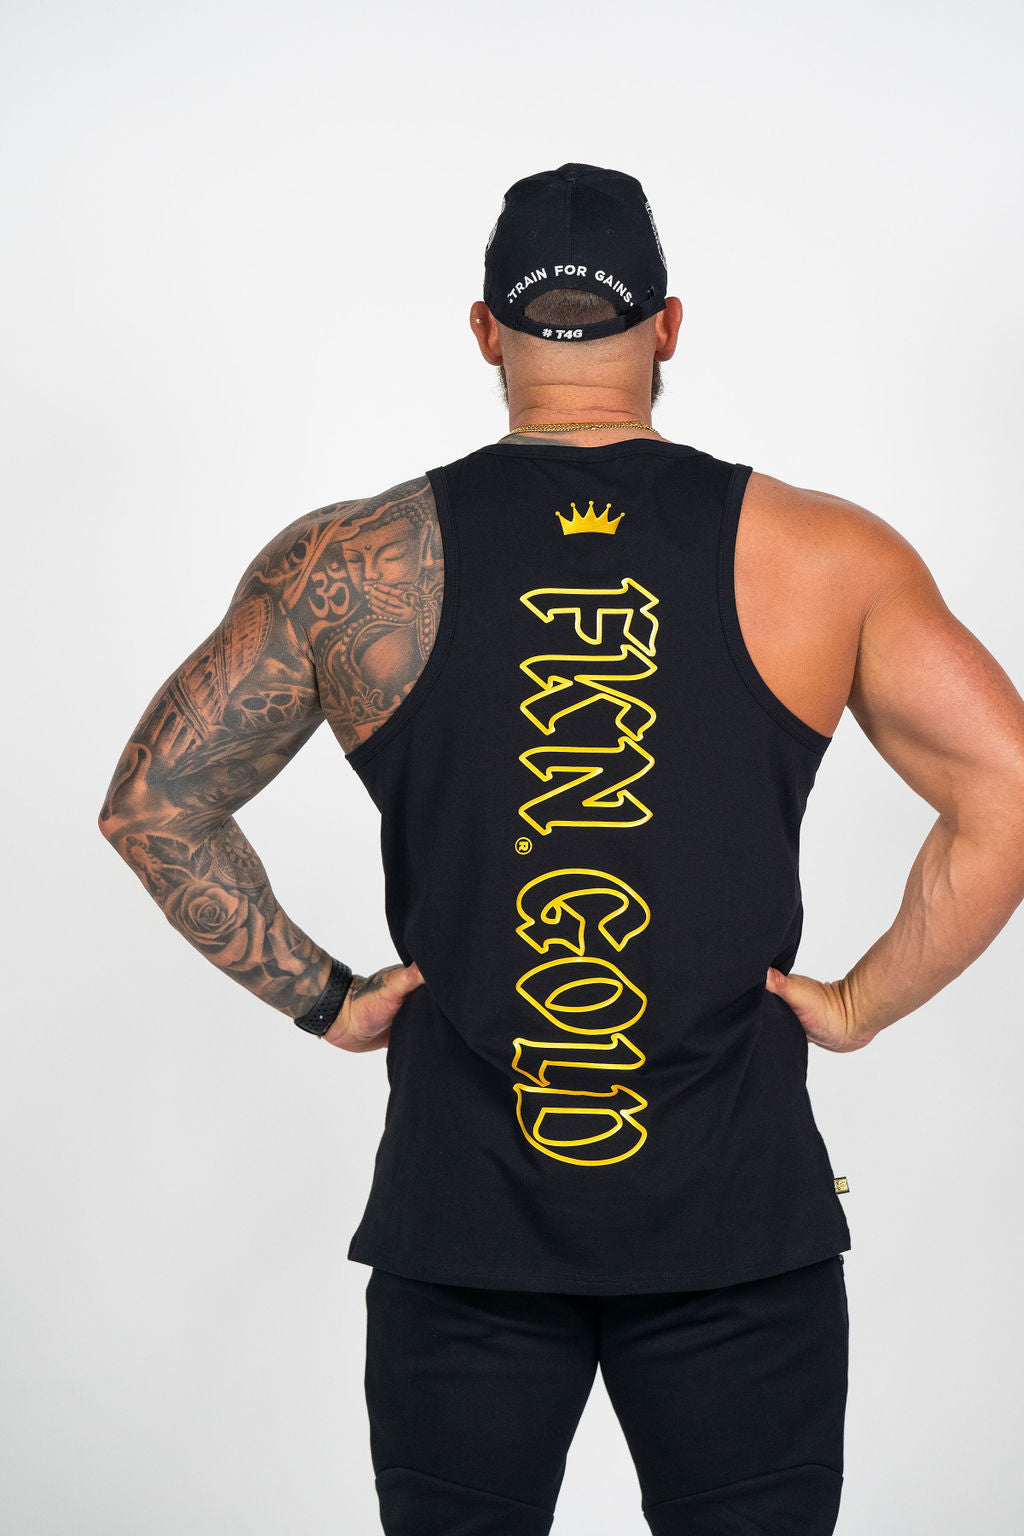 Conquer | Men's FKN GOLD Gym Singlet | Black & Gold